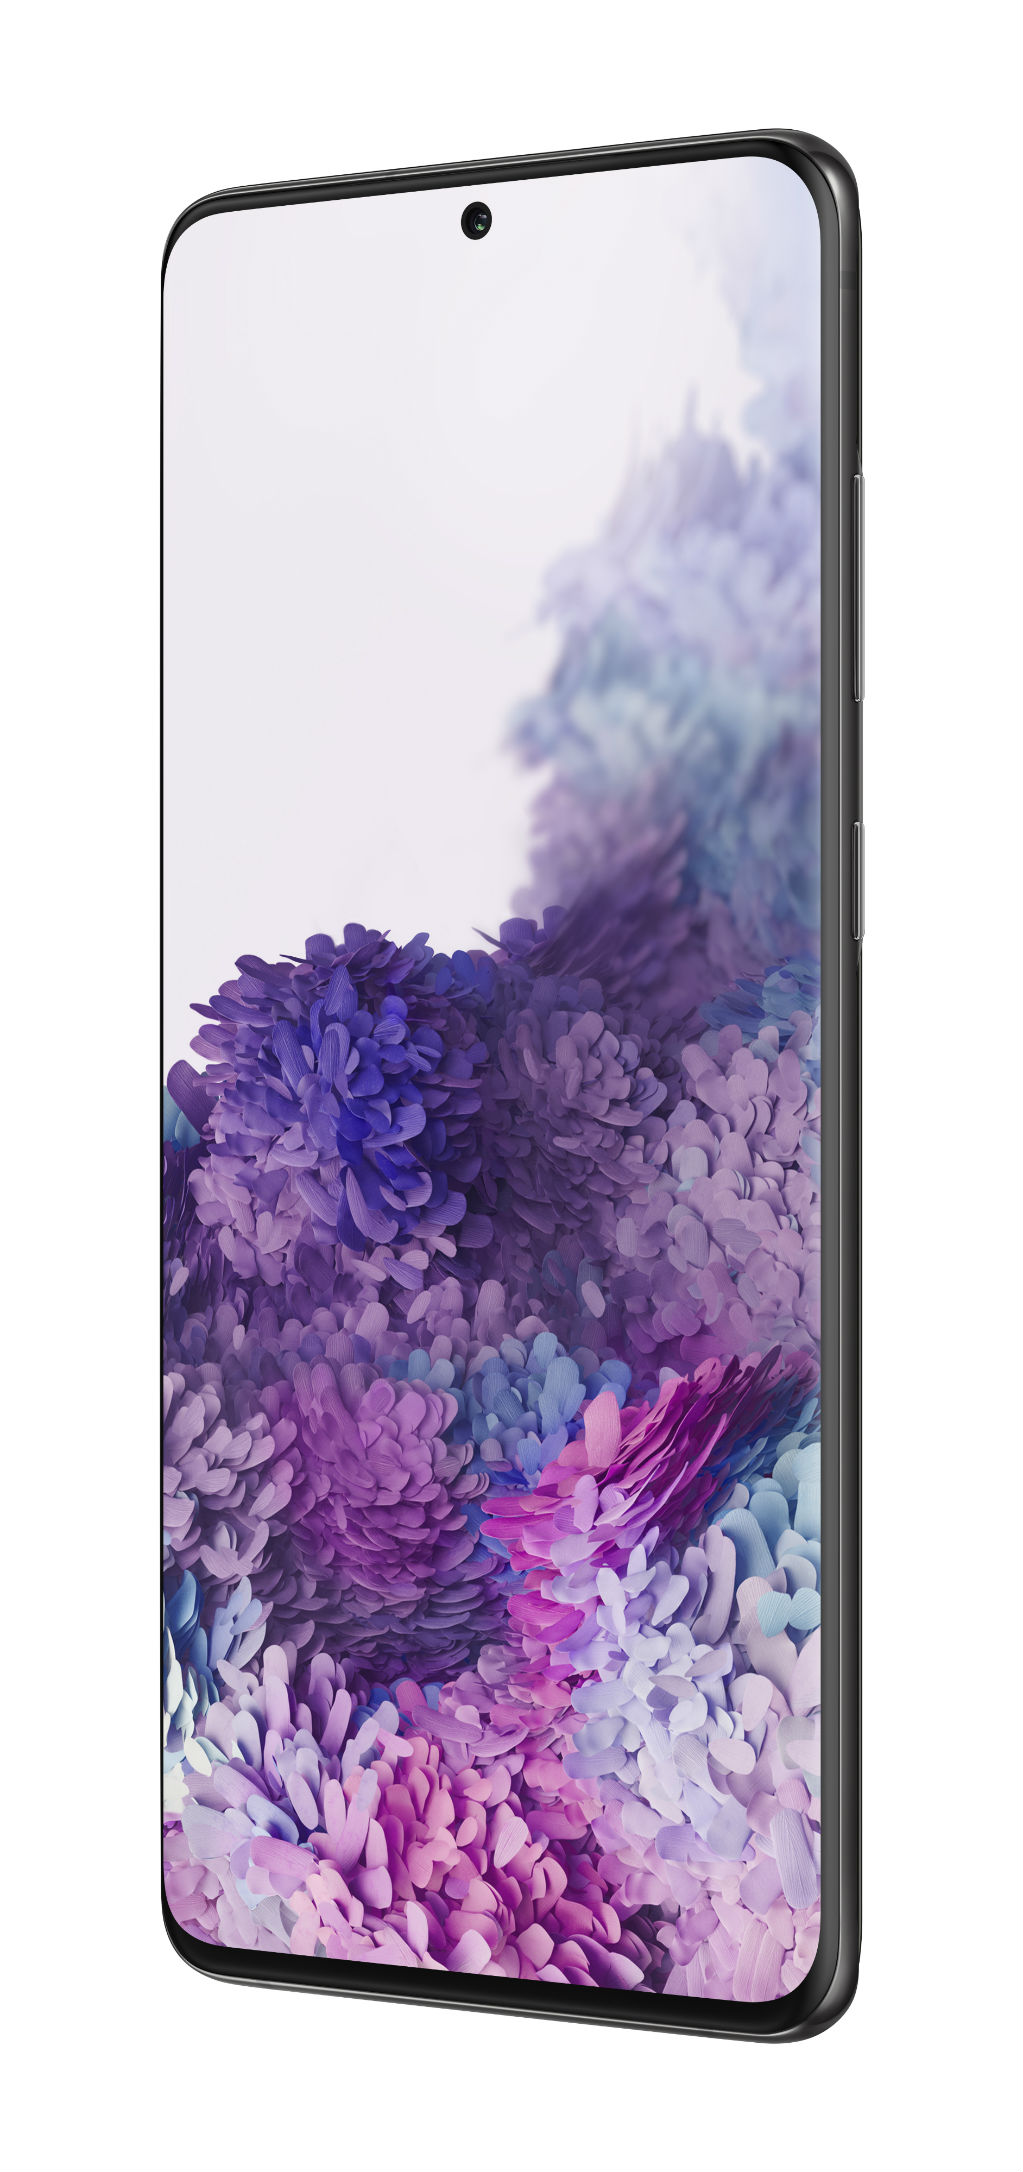 SAMSUNG Unlocked Galaxy S20 Plus, 128GB Black - Smartphone - image 4 of 6